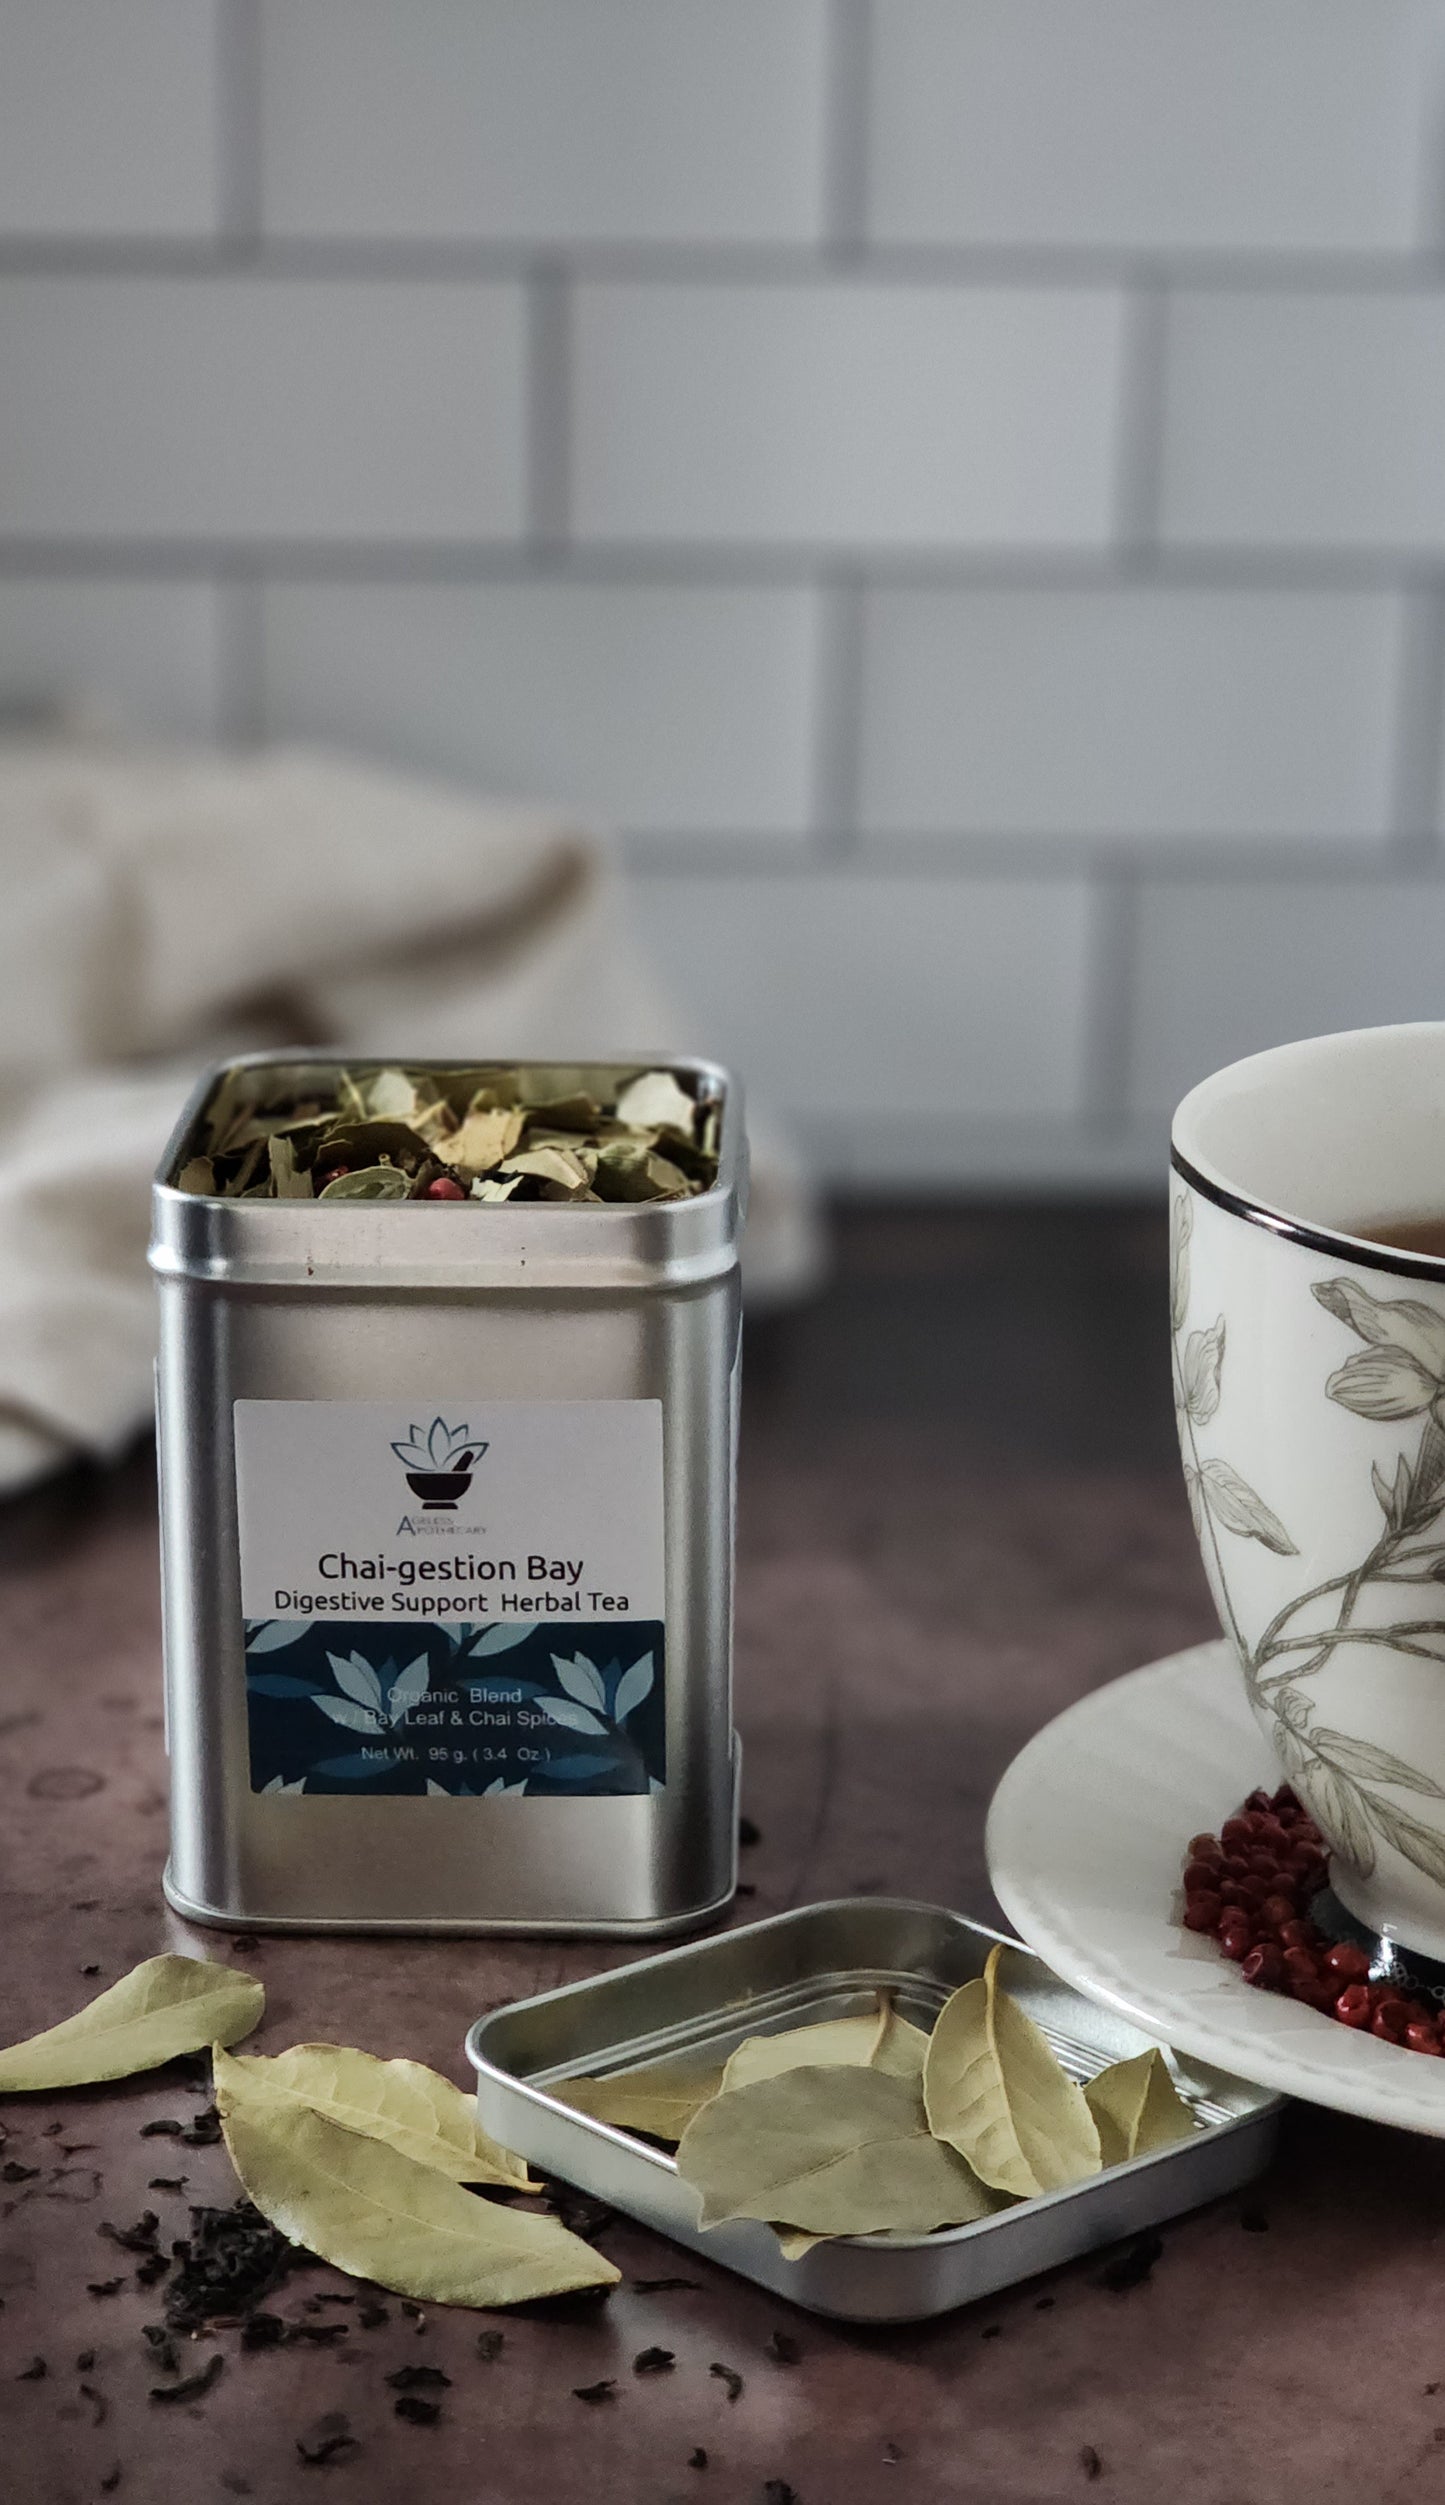 Chai-gestion Bay - Digestive Support Herbal Tea